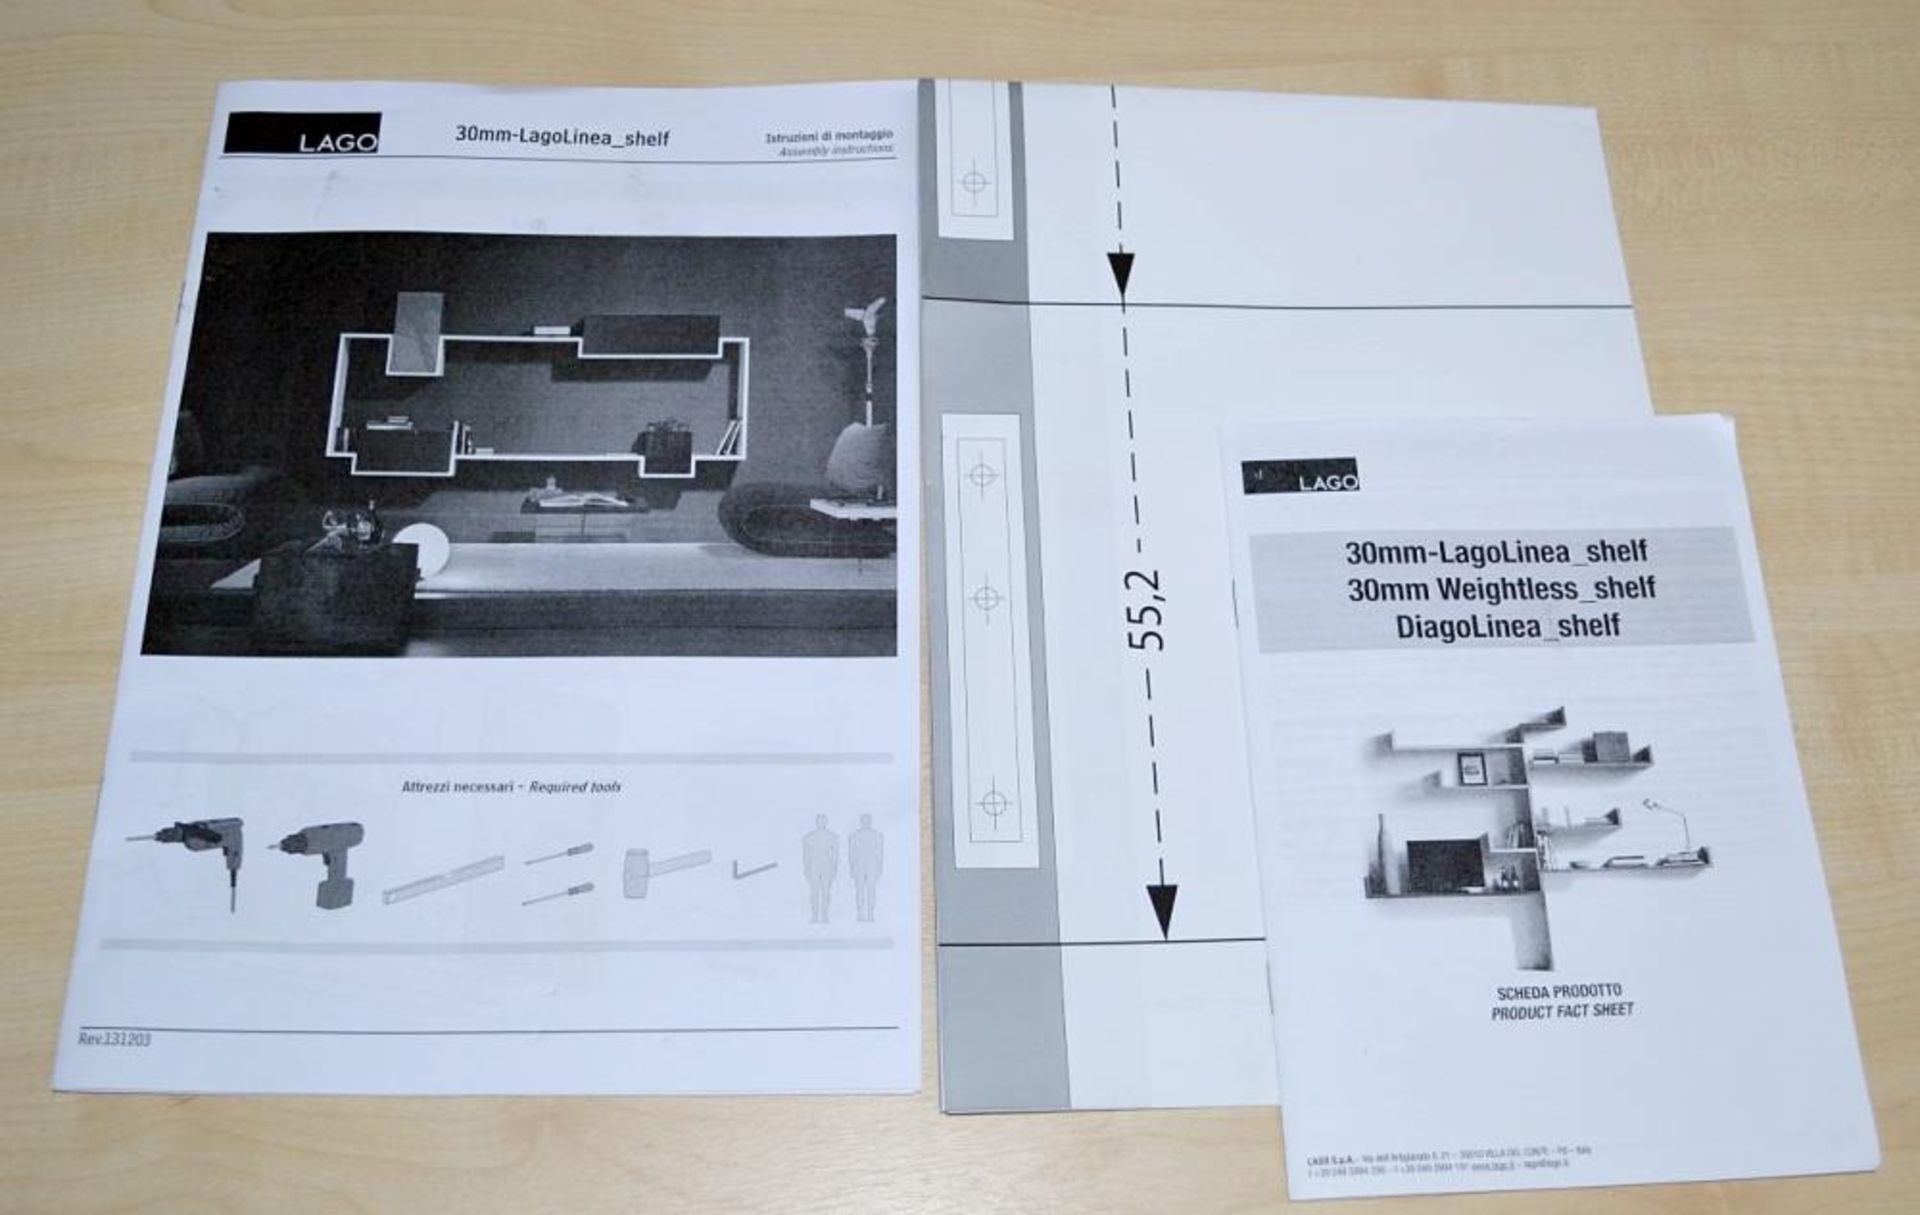 1 x LAGO 'Lagolinea' 30mm Modular Wall-Mounted Designer Shelving System - Boxed Stock - Ref: 5766889 - Image 2 of 10